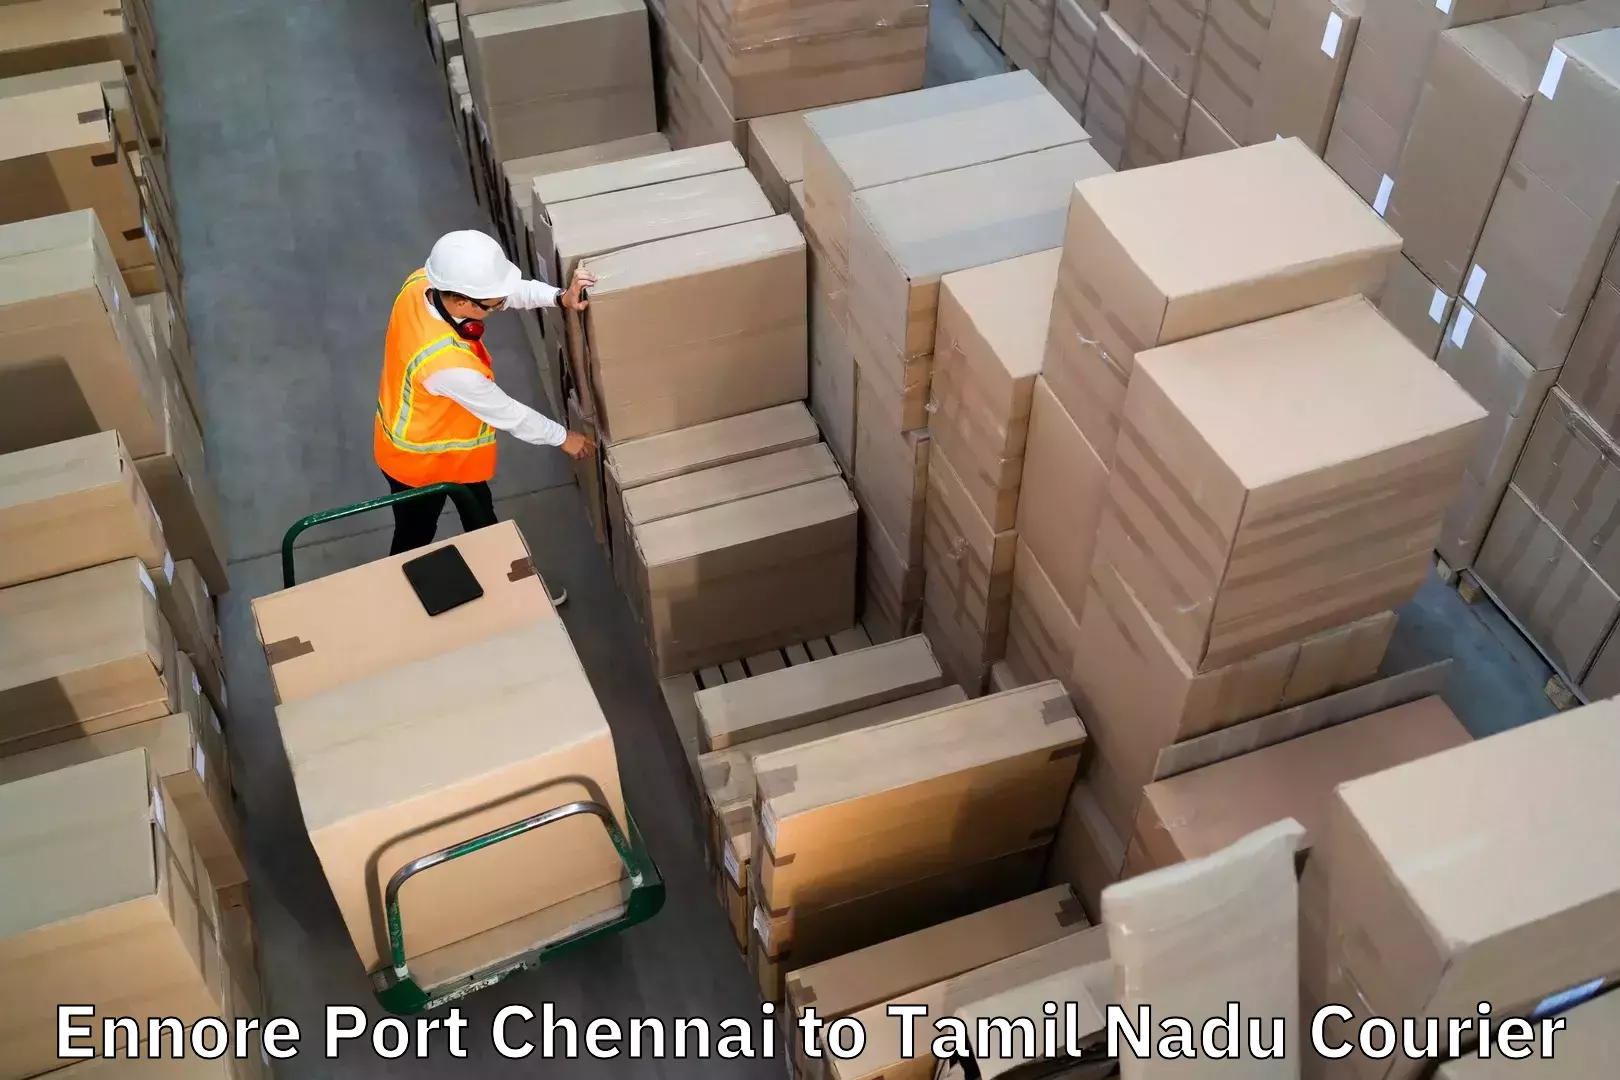 Luggage shipment specialists Ennore Port Chennai to Tirupattur